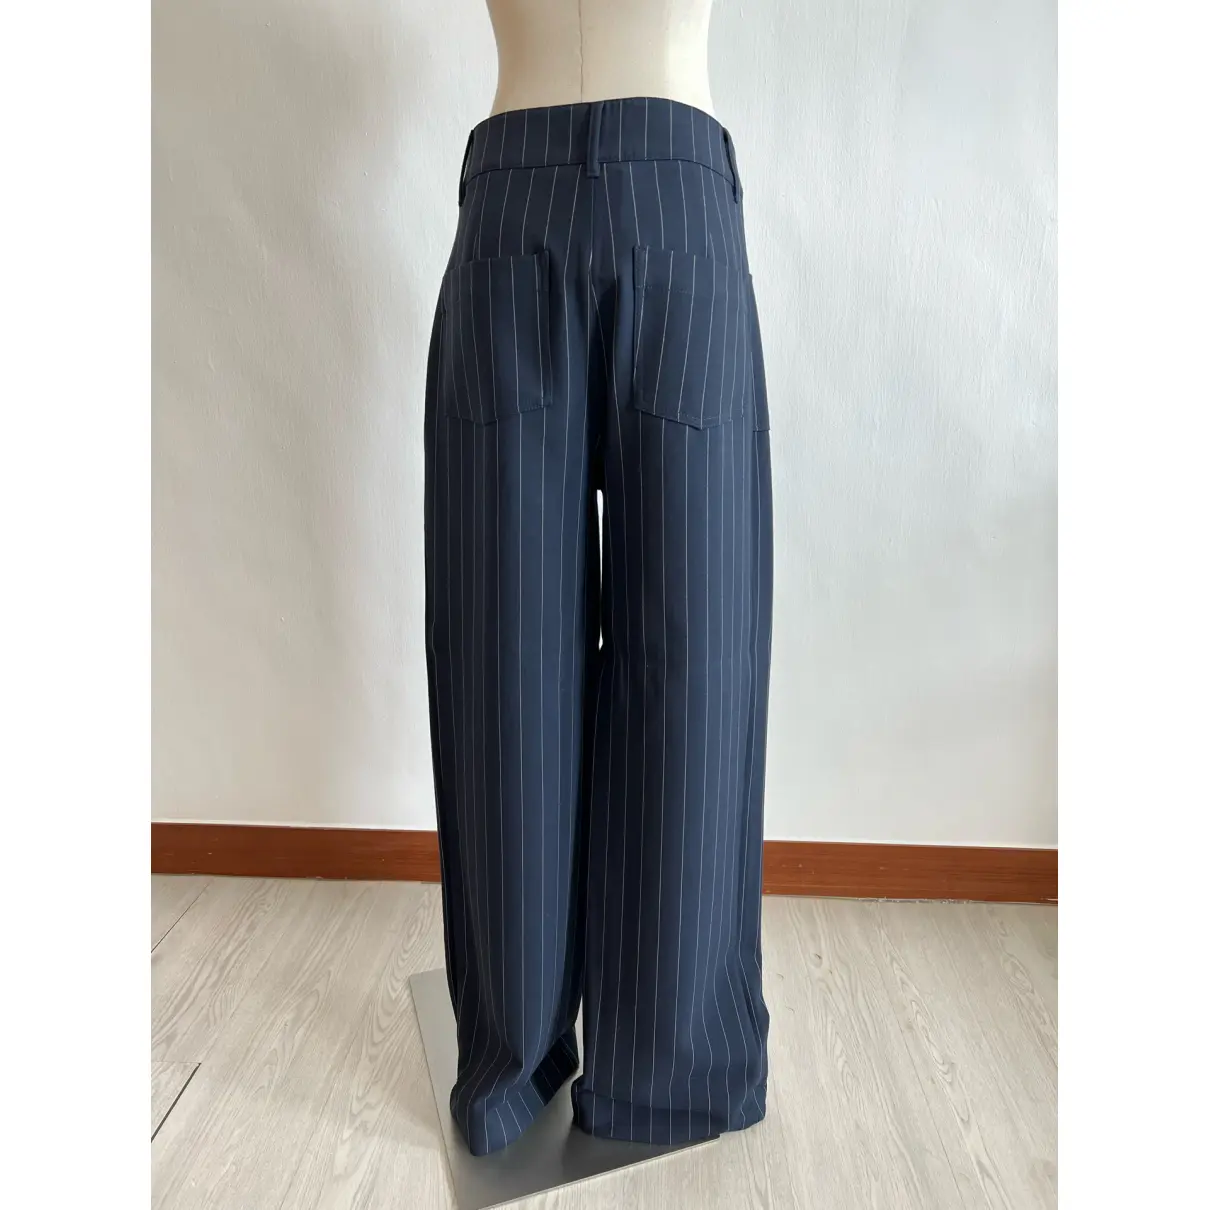 Buy Ganni Fall Winter 2019 trousers online